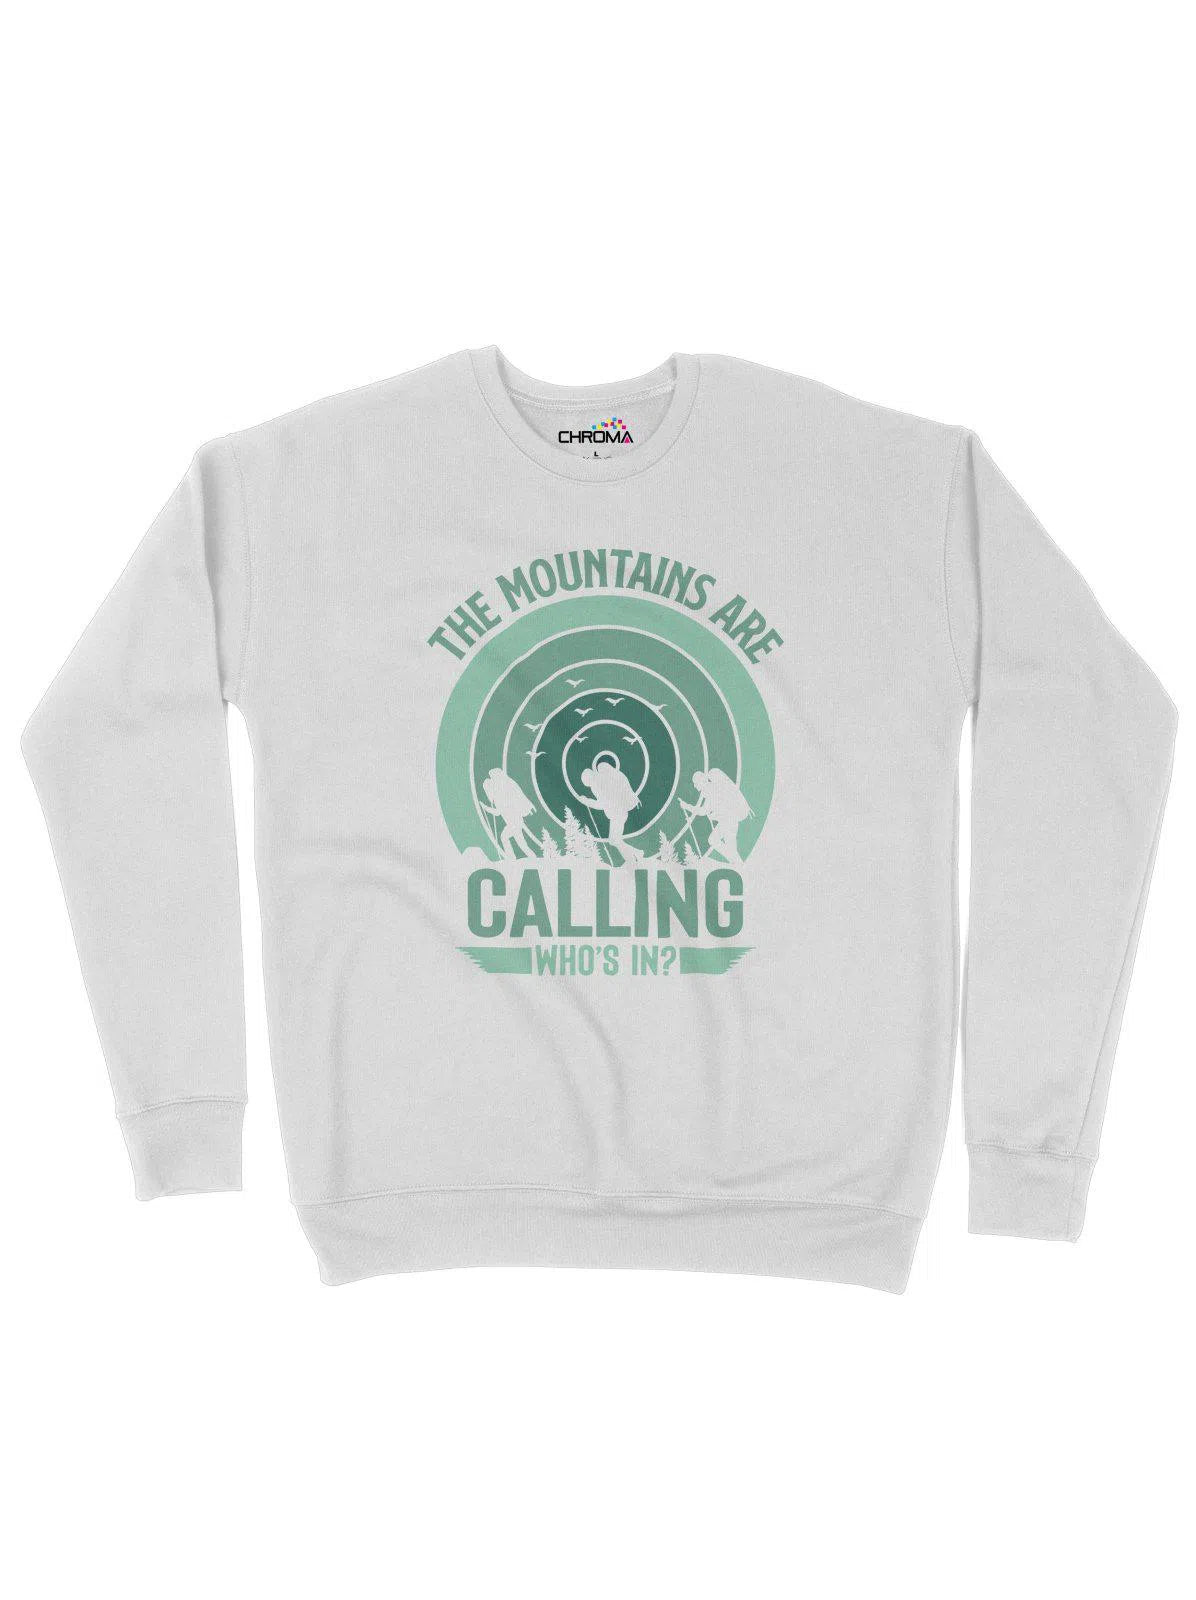 The Mountains Are Calling Adventure Unisex Adult Sweatshirt Chroma Clothing